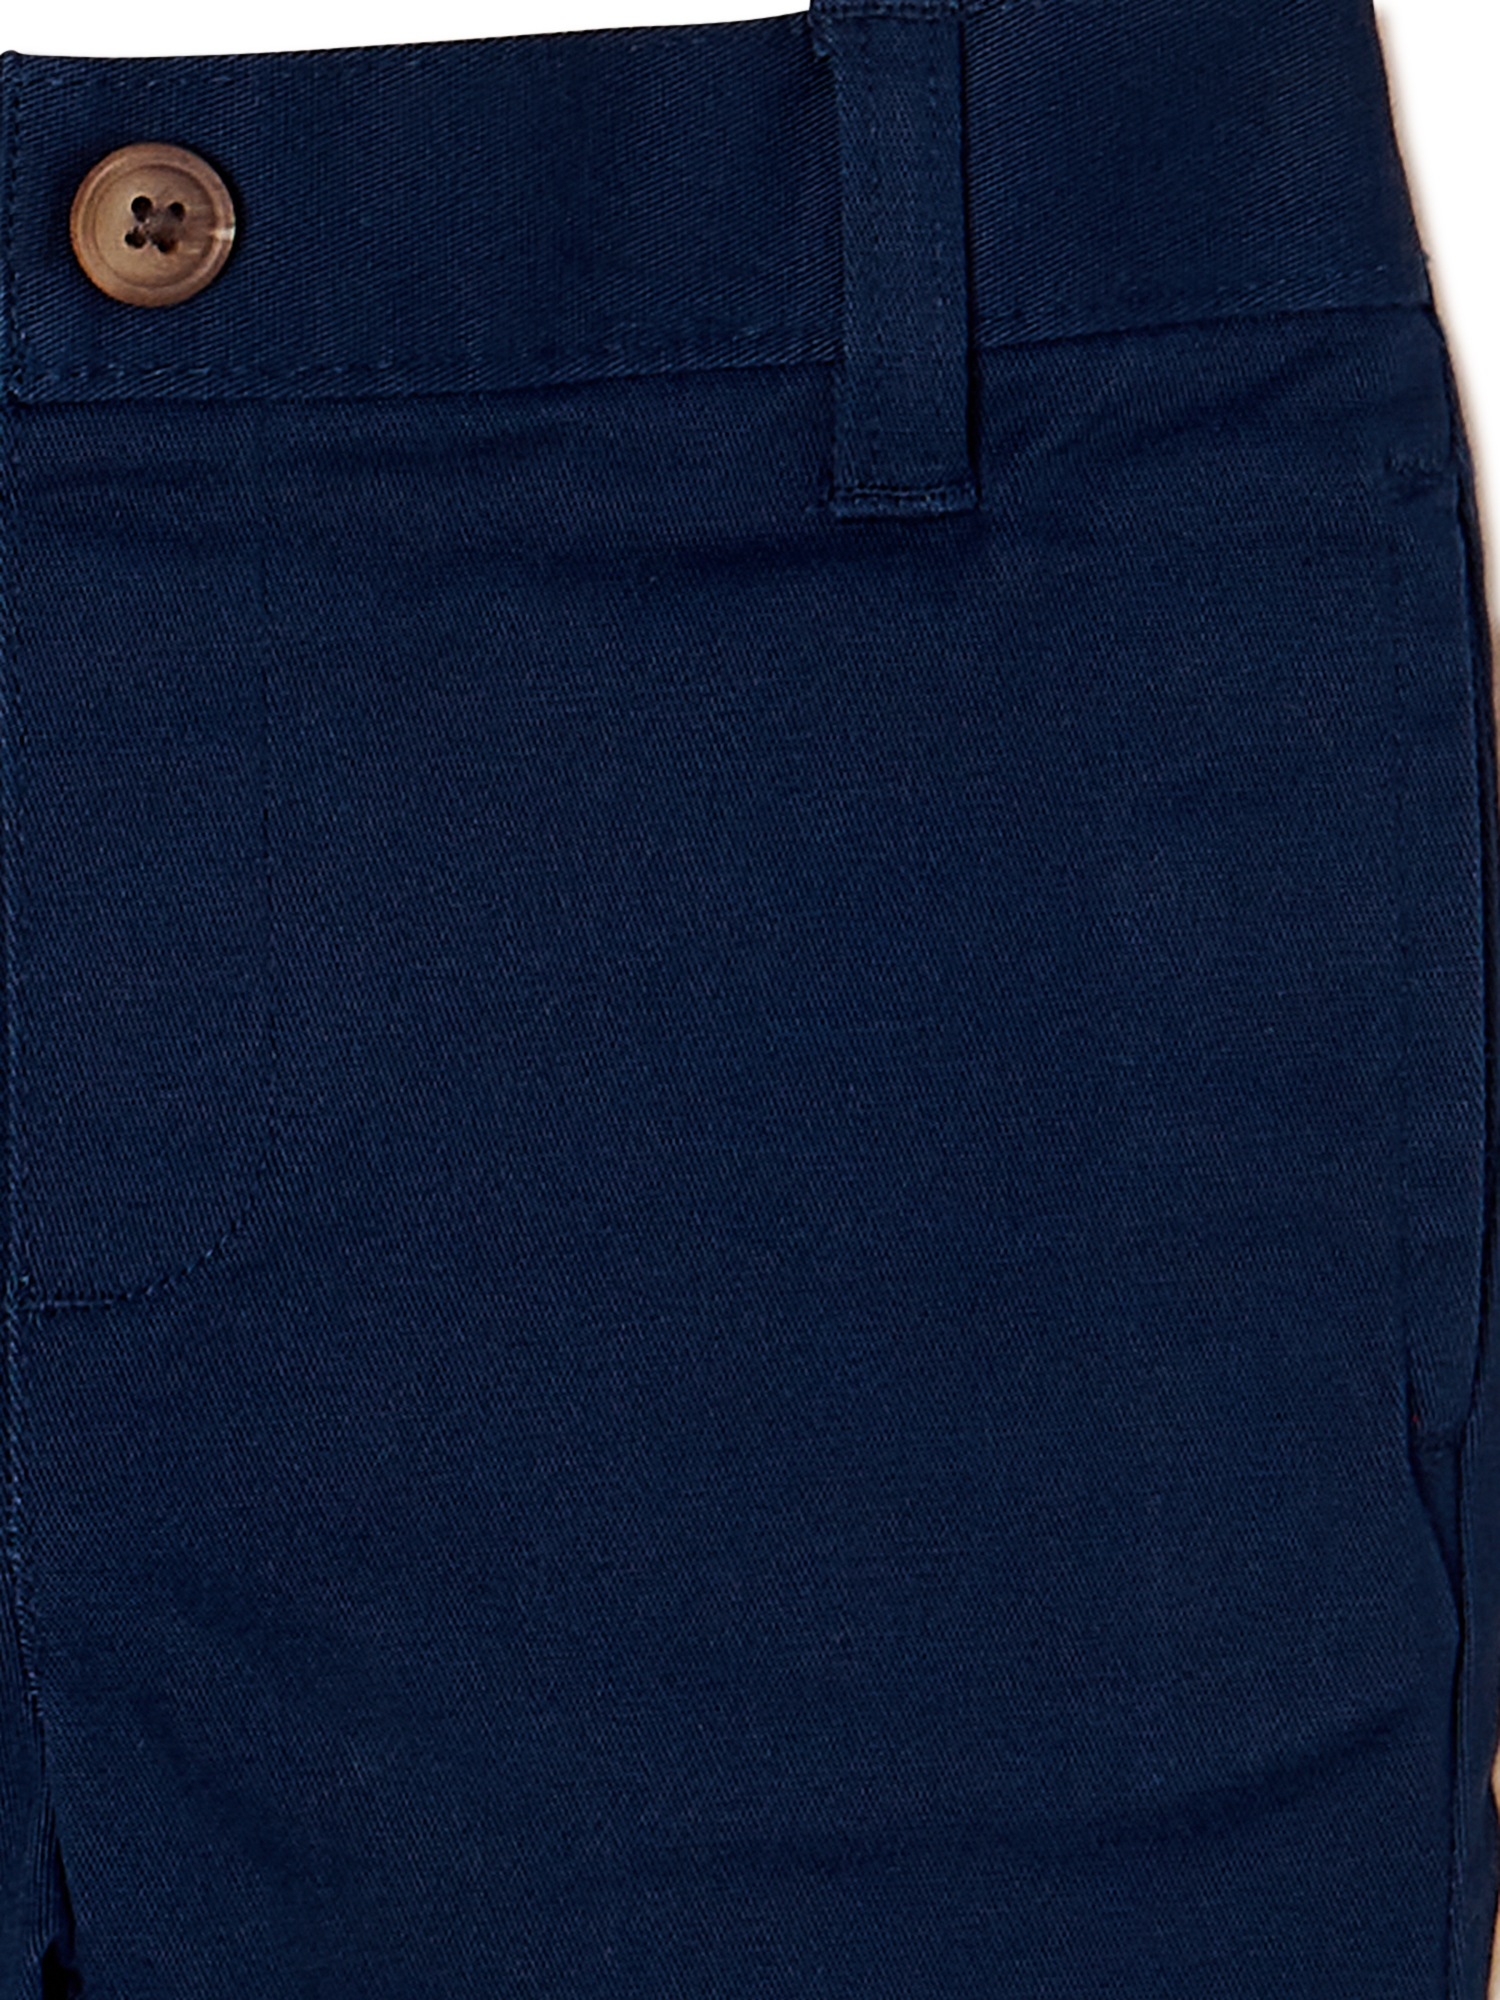 French Toast Boys School Uniform Adjustable Waist Relaxed Fit Pants, Sizes  4-20, Slim, & Husky 